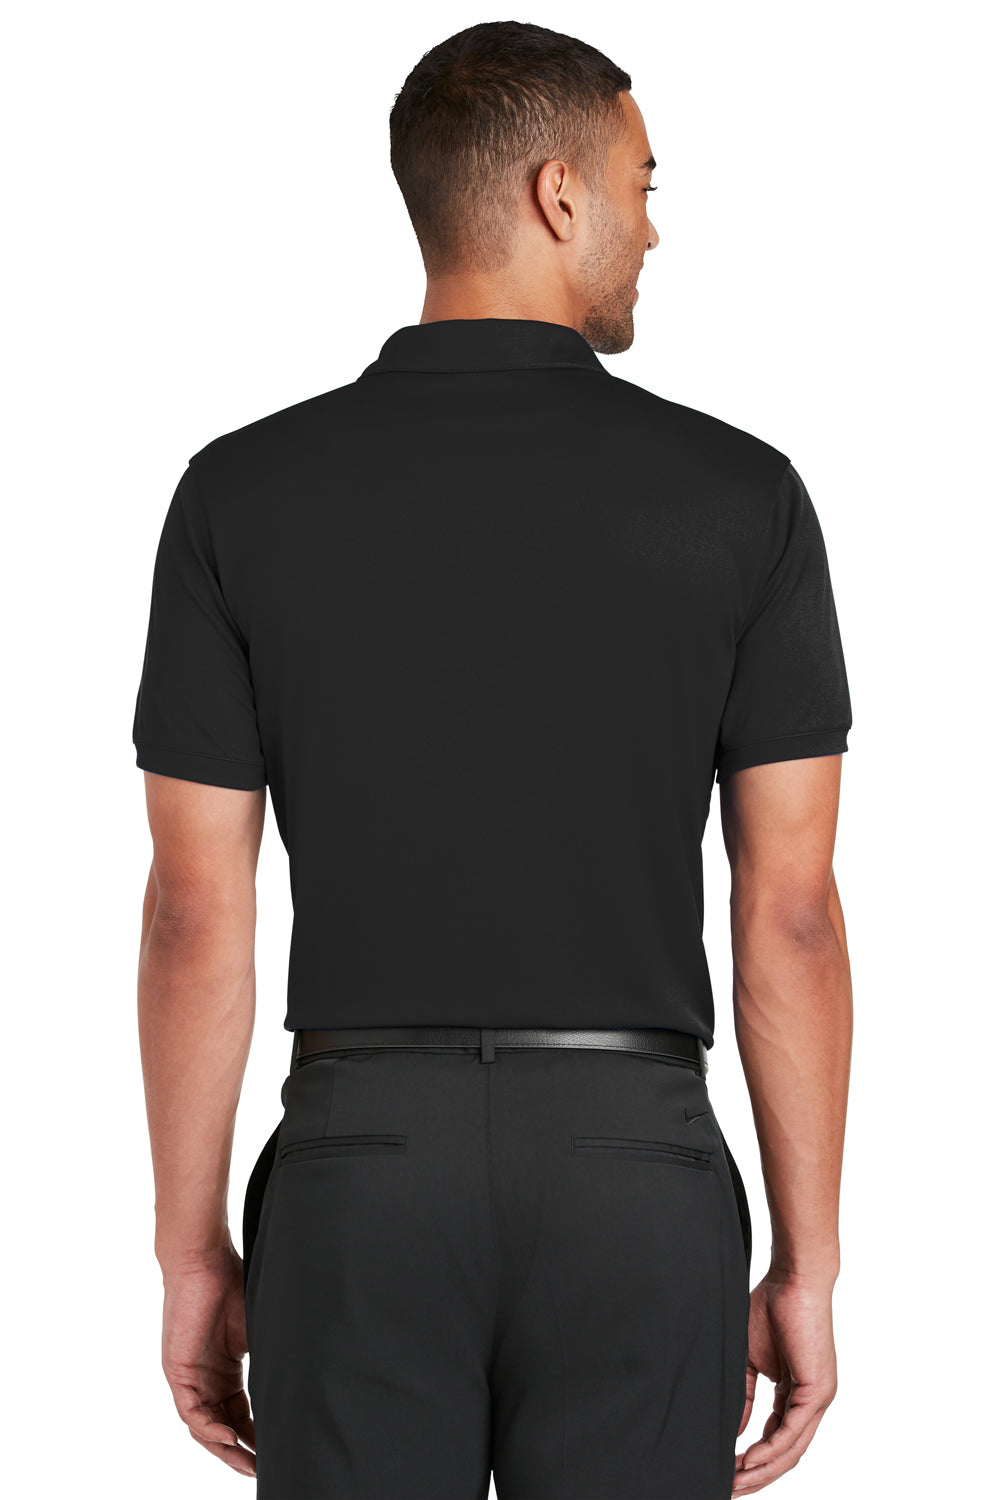 Nike 799802 Mens Players Dri-Fit Moisture Wicking Short Sleeve Polo Shirt Black Model Back